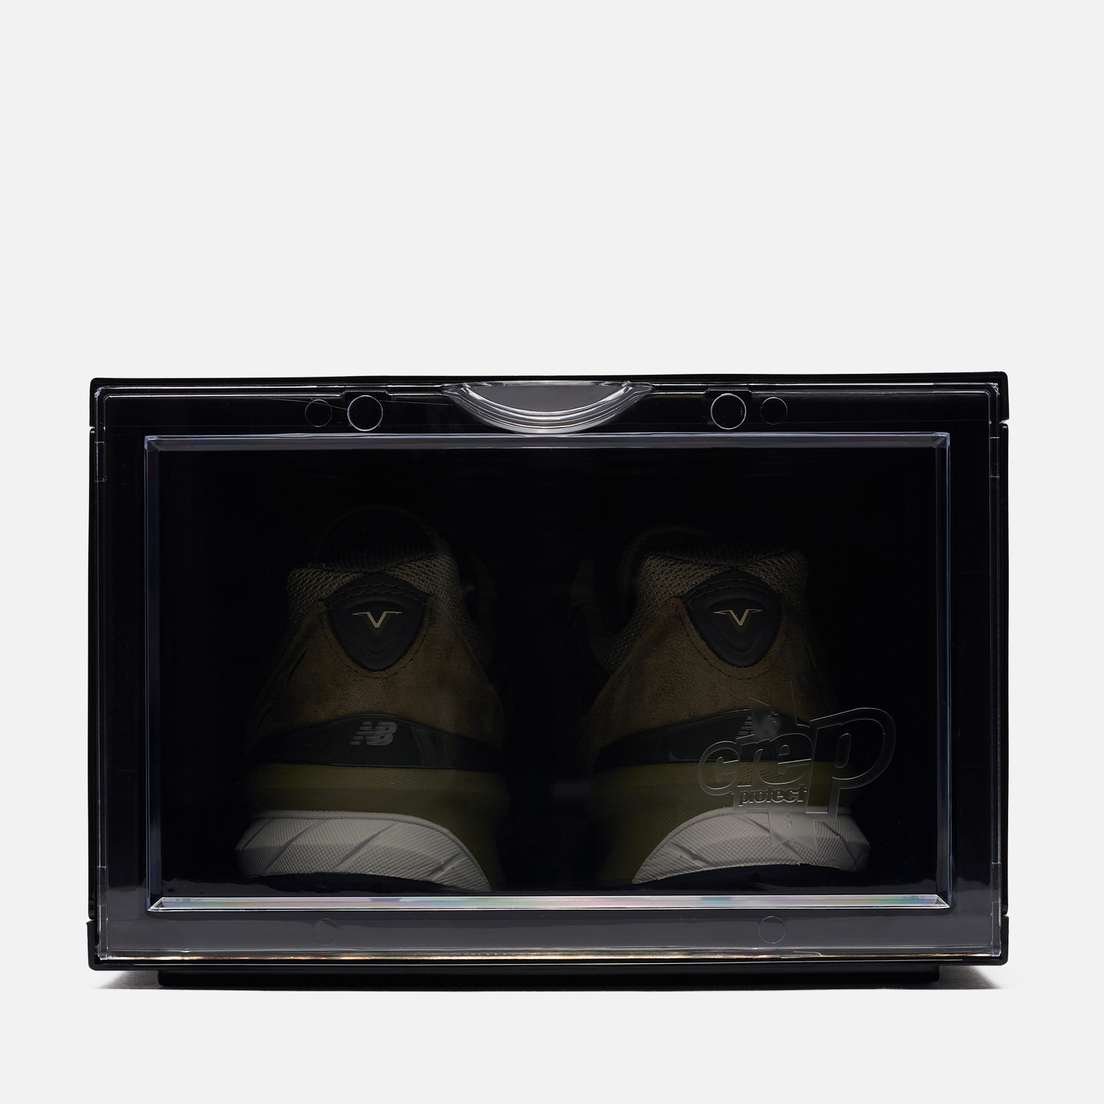 Crep Protect Боксы для хранения обуви Crate